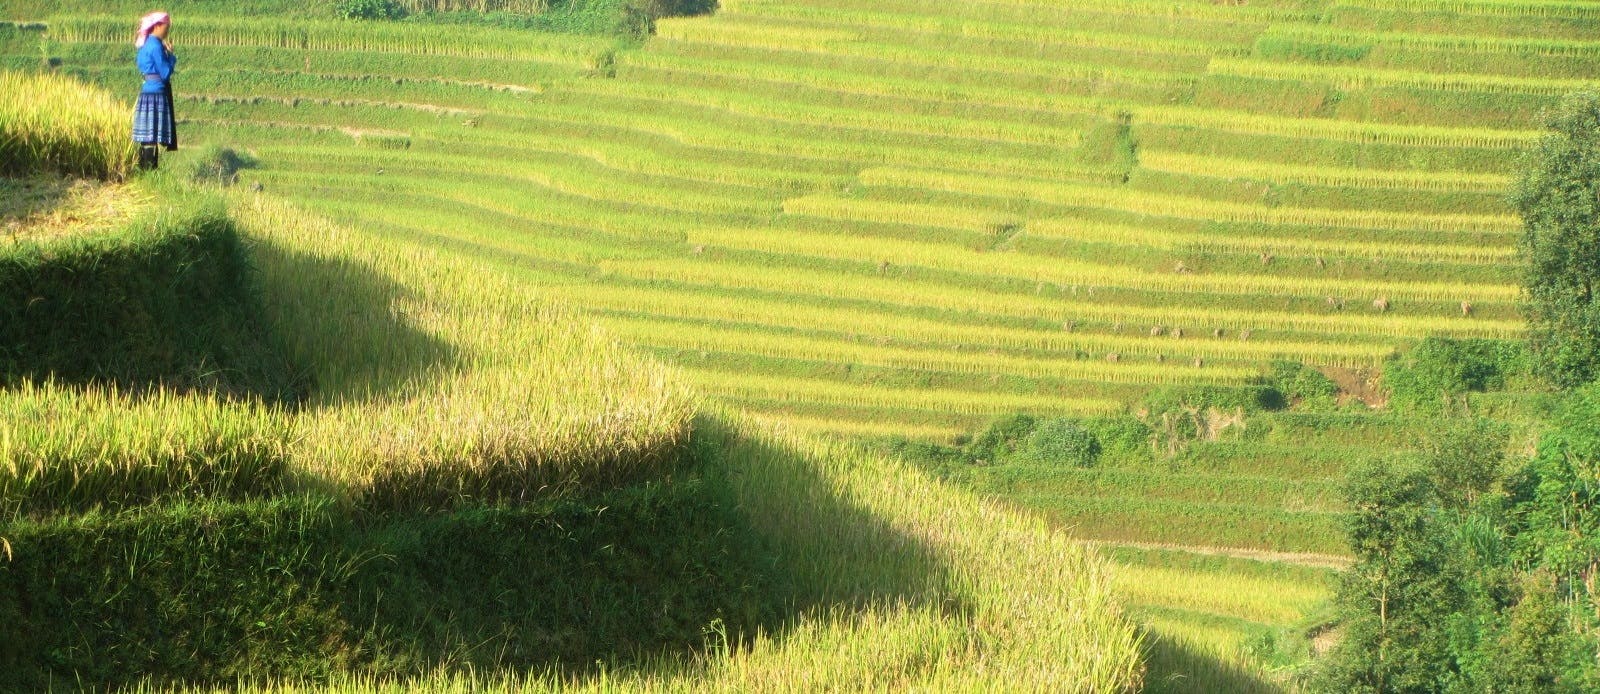 Harvest Route: Mu Cang Chai, Vietnam